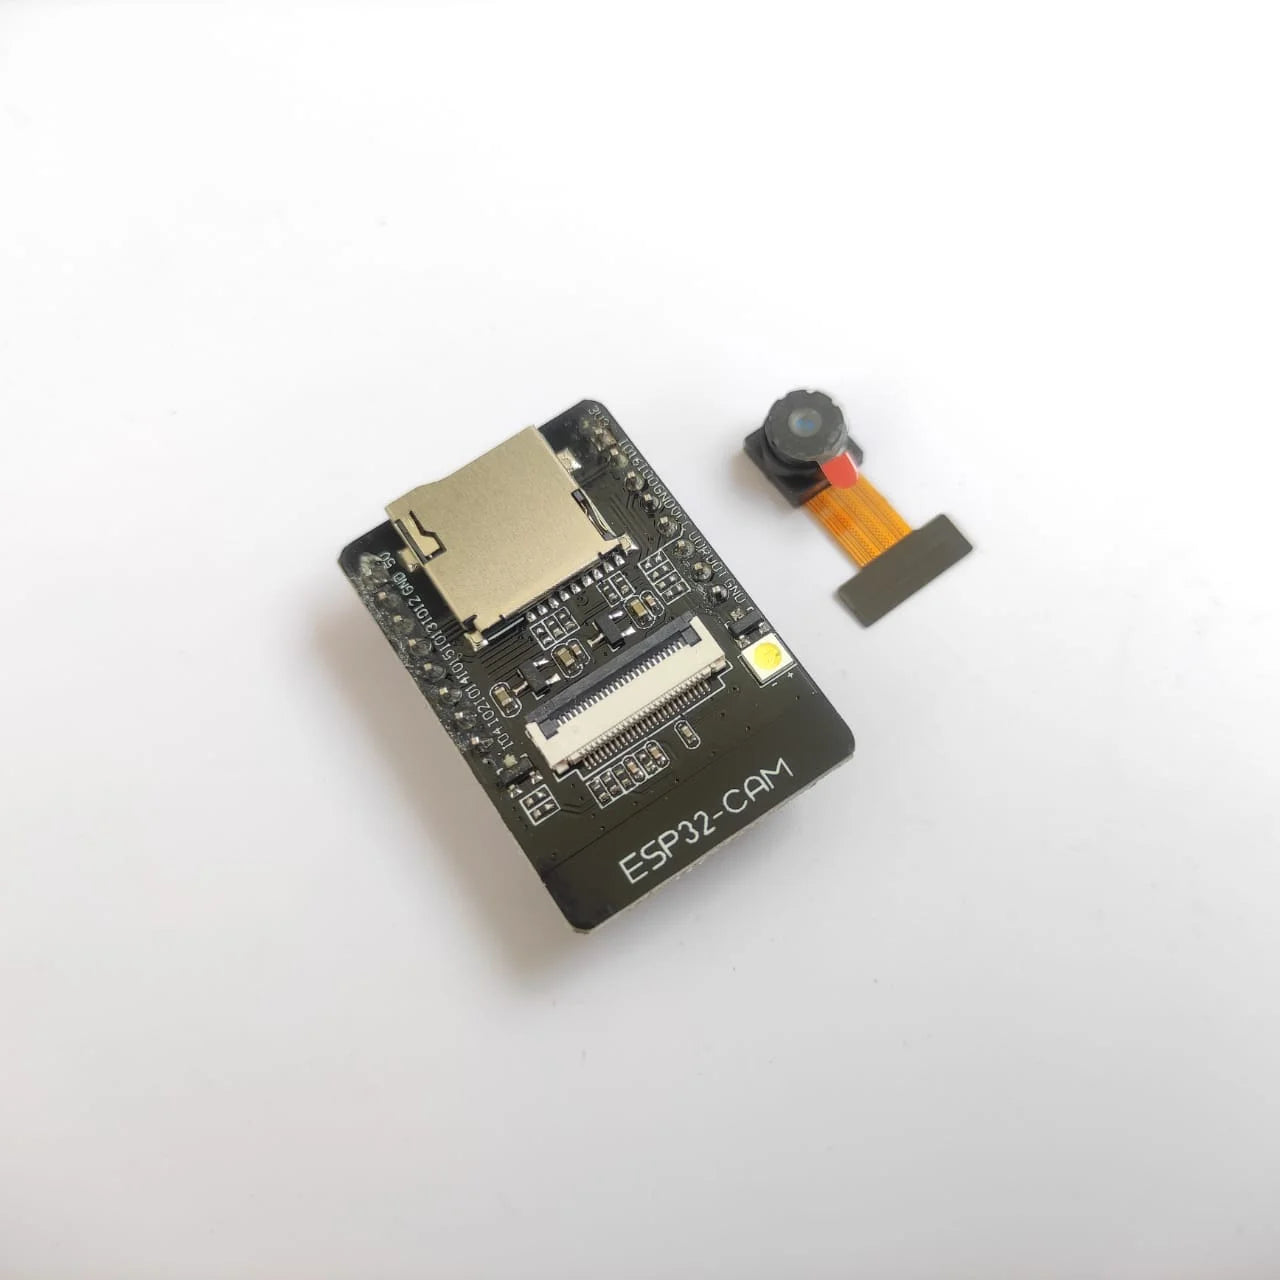 ESP32 CAM WiFi Module Bluetooth with OV2640 Camera Module 2MP For Face Recognization (Free 5 Jumper Wire)